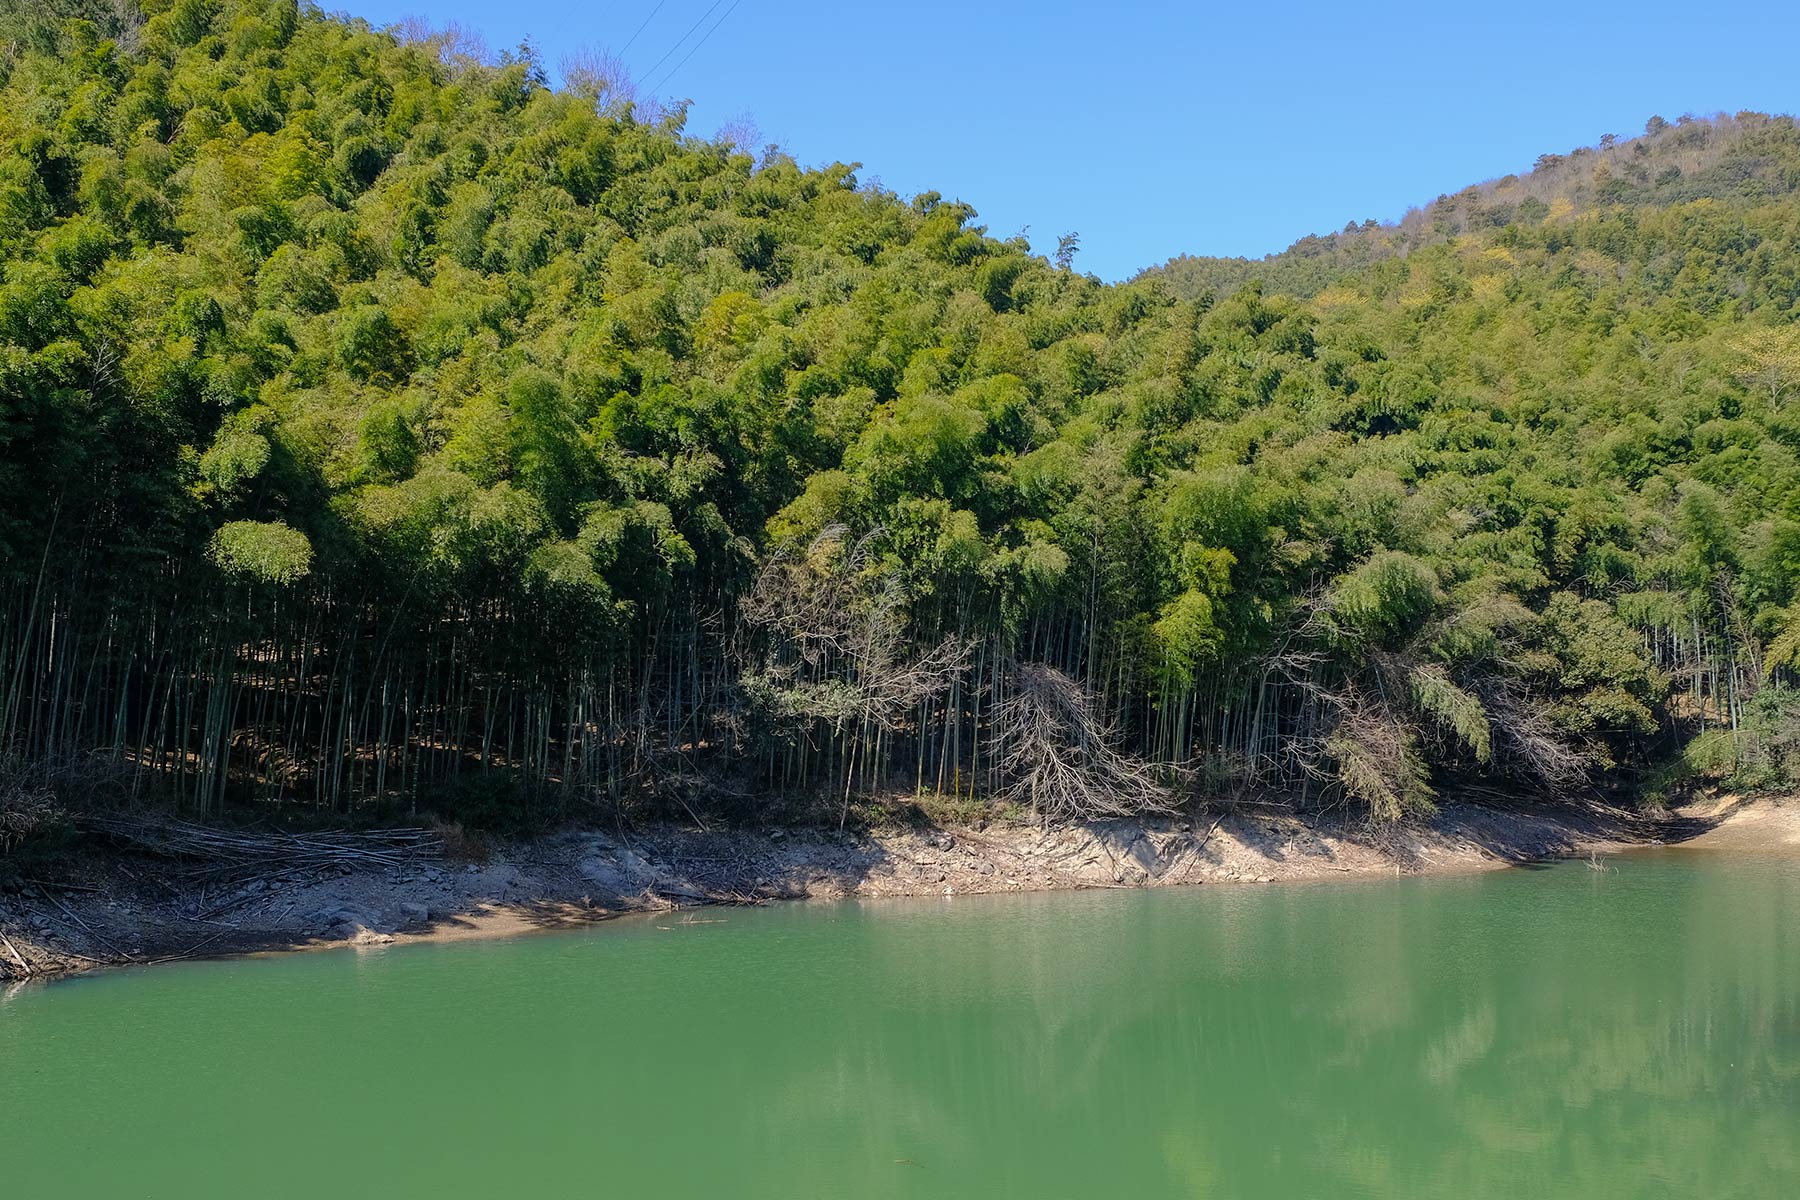 Teich im Nine Dragon Lake Park in Ningbo, China